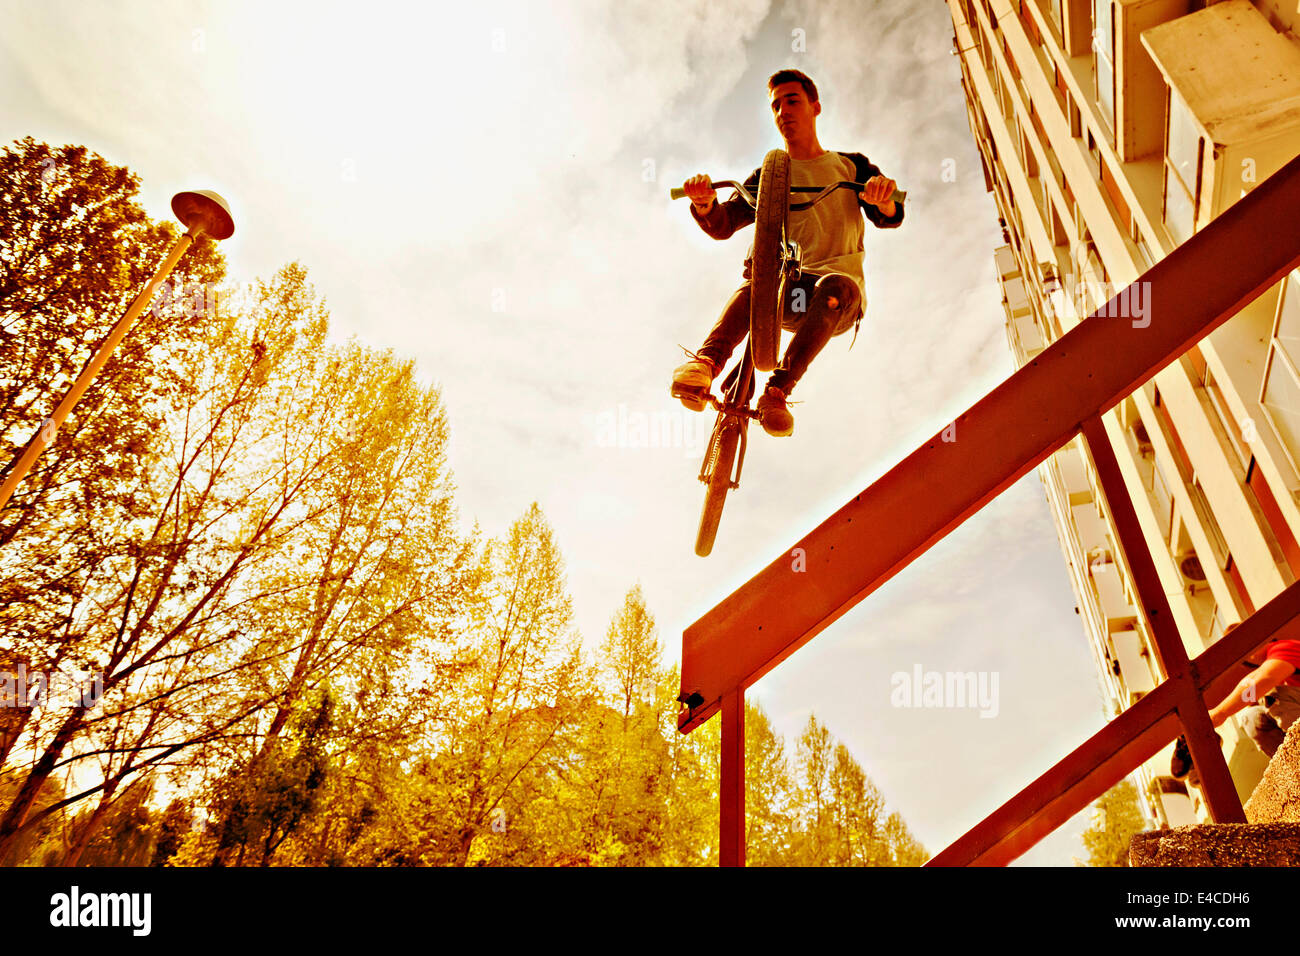 BMX biker performing a stunt over a railing Stock Photo